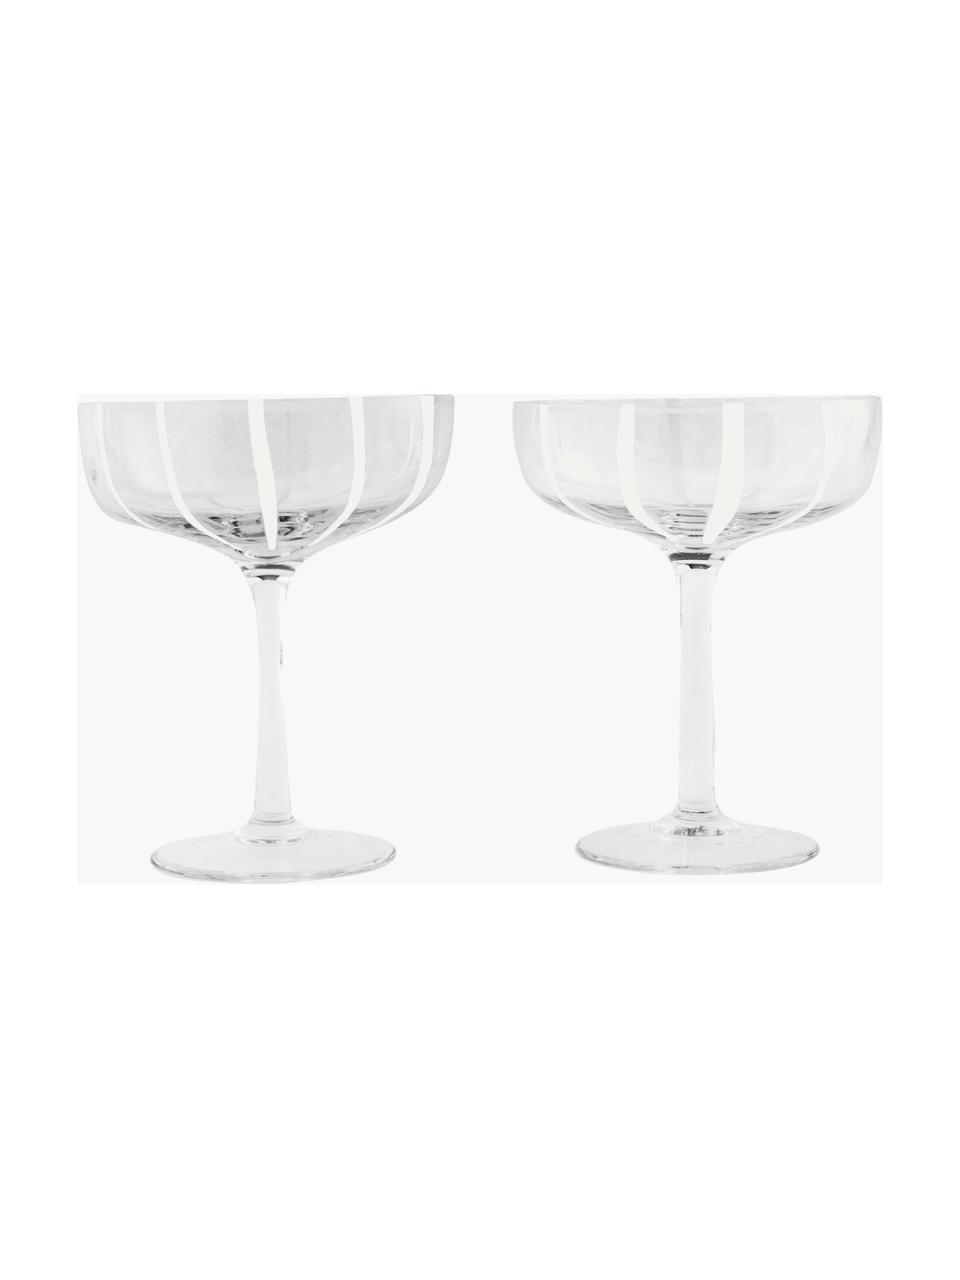 Coppa champagne in vetro soffiato Mizu, 2 pz., Vetro, Trasparente, bianco, Ø 11 x Alt. 14 cm, 230 ml